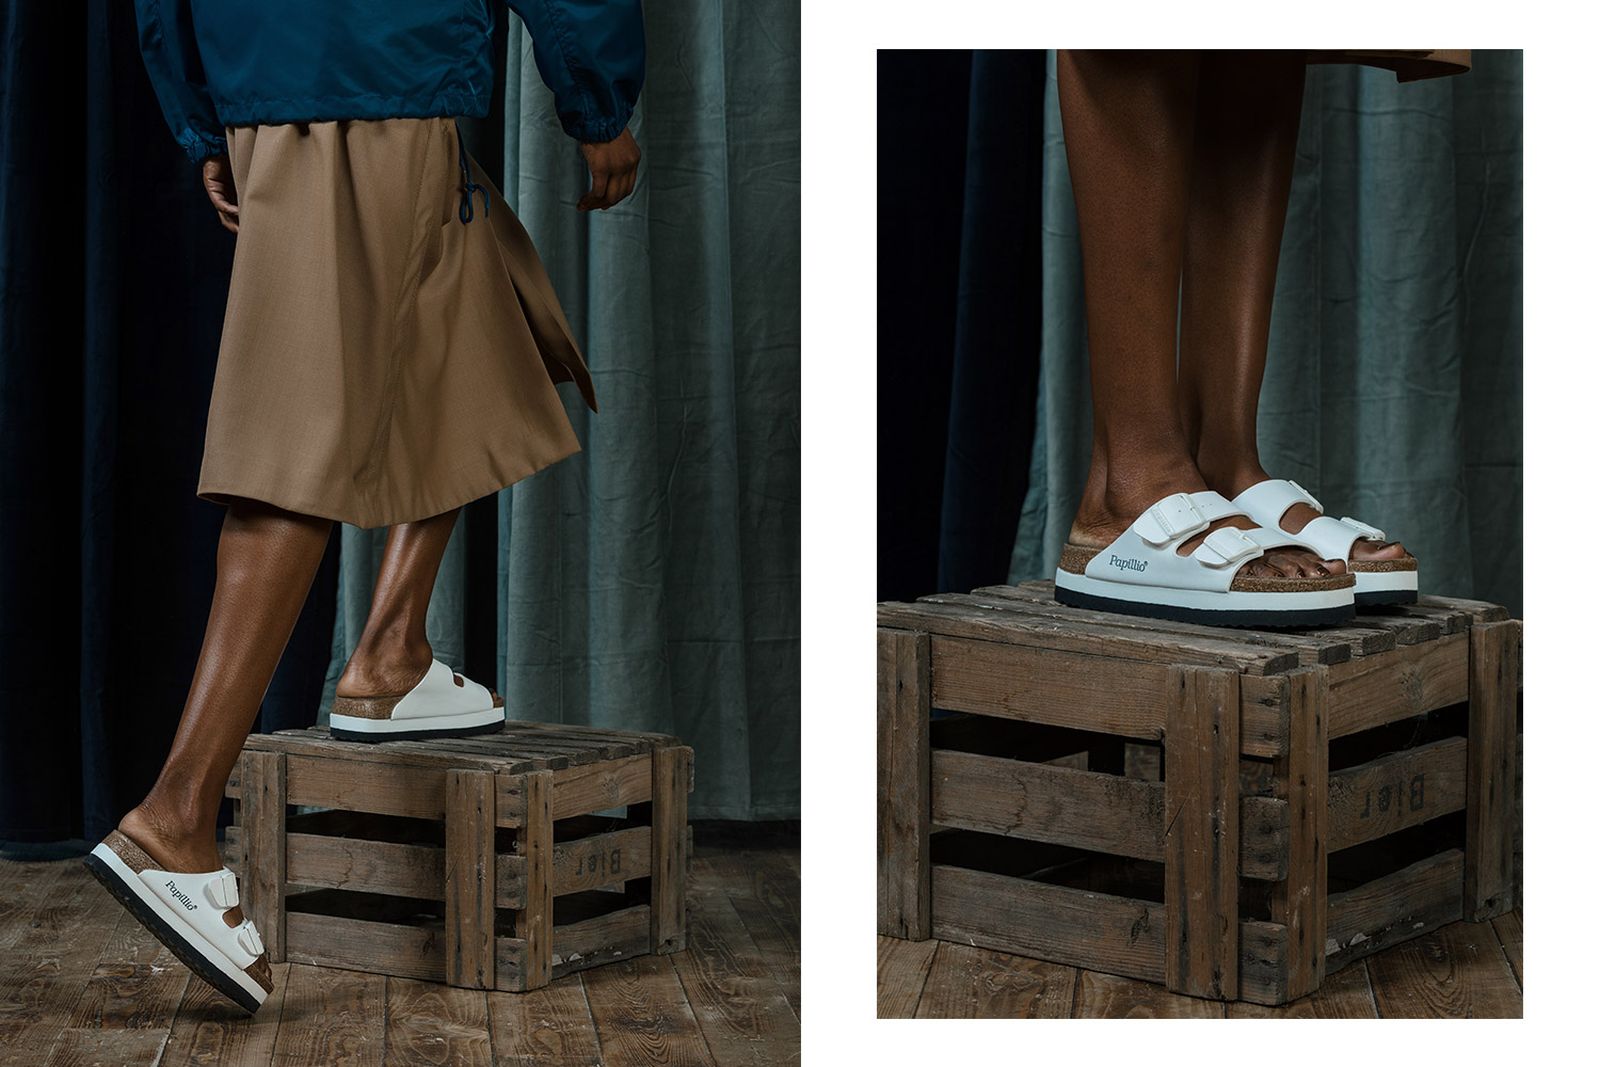 birkenstock-sandals-history-design-fashion-02